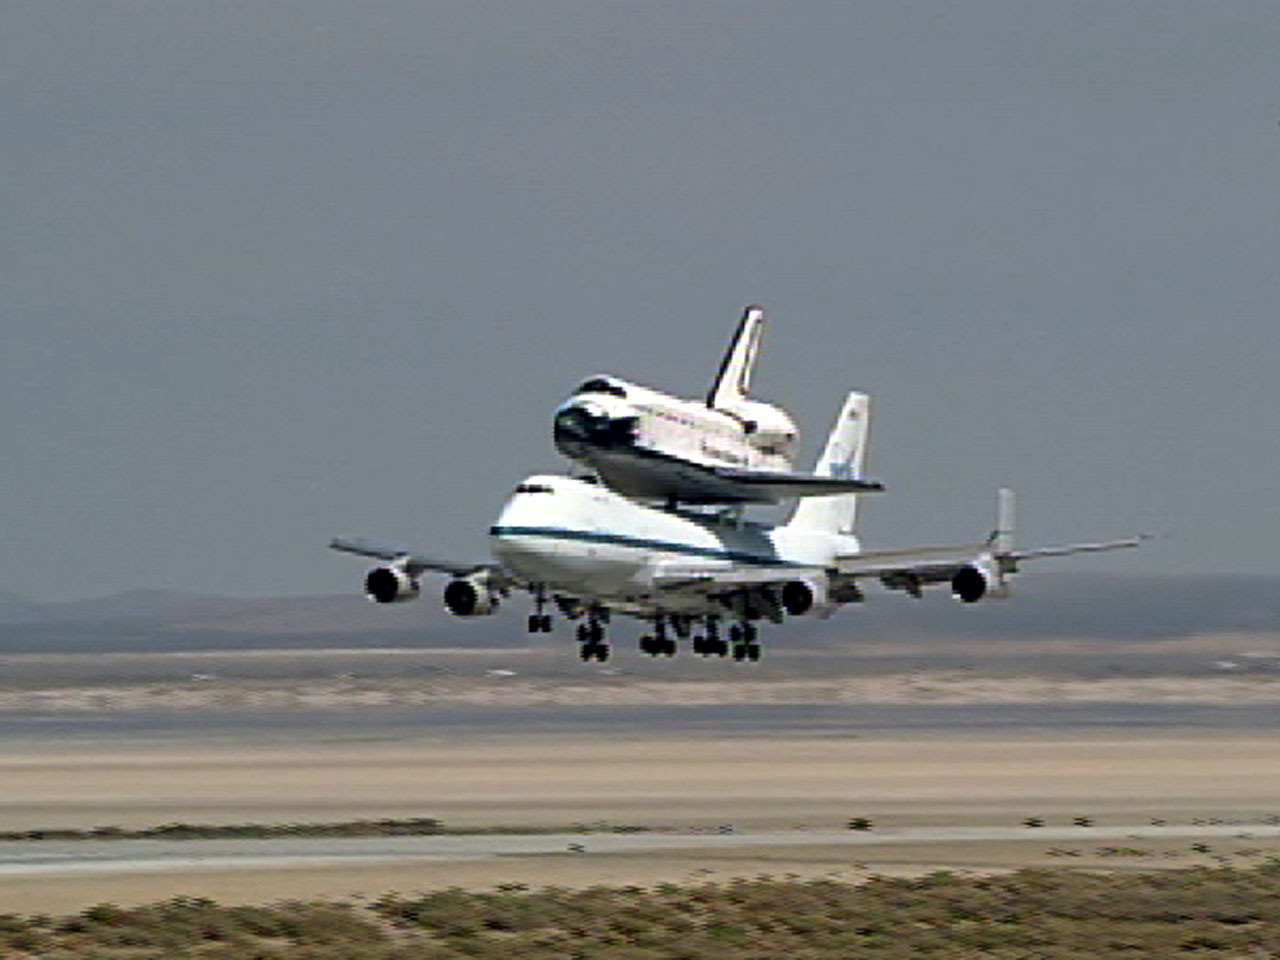 space shuttle endeavour lands at lax